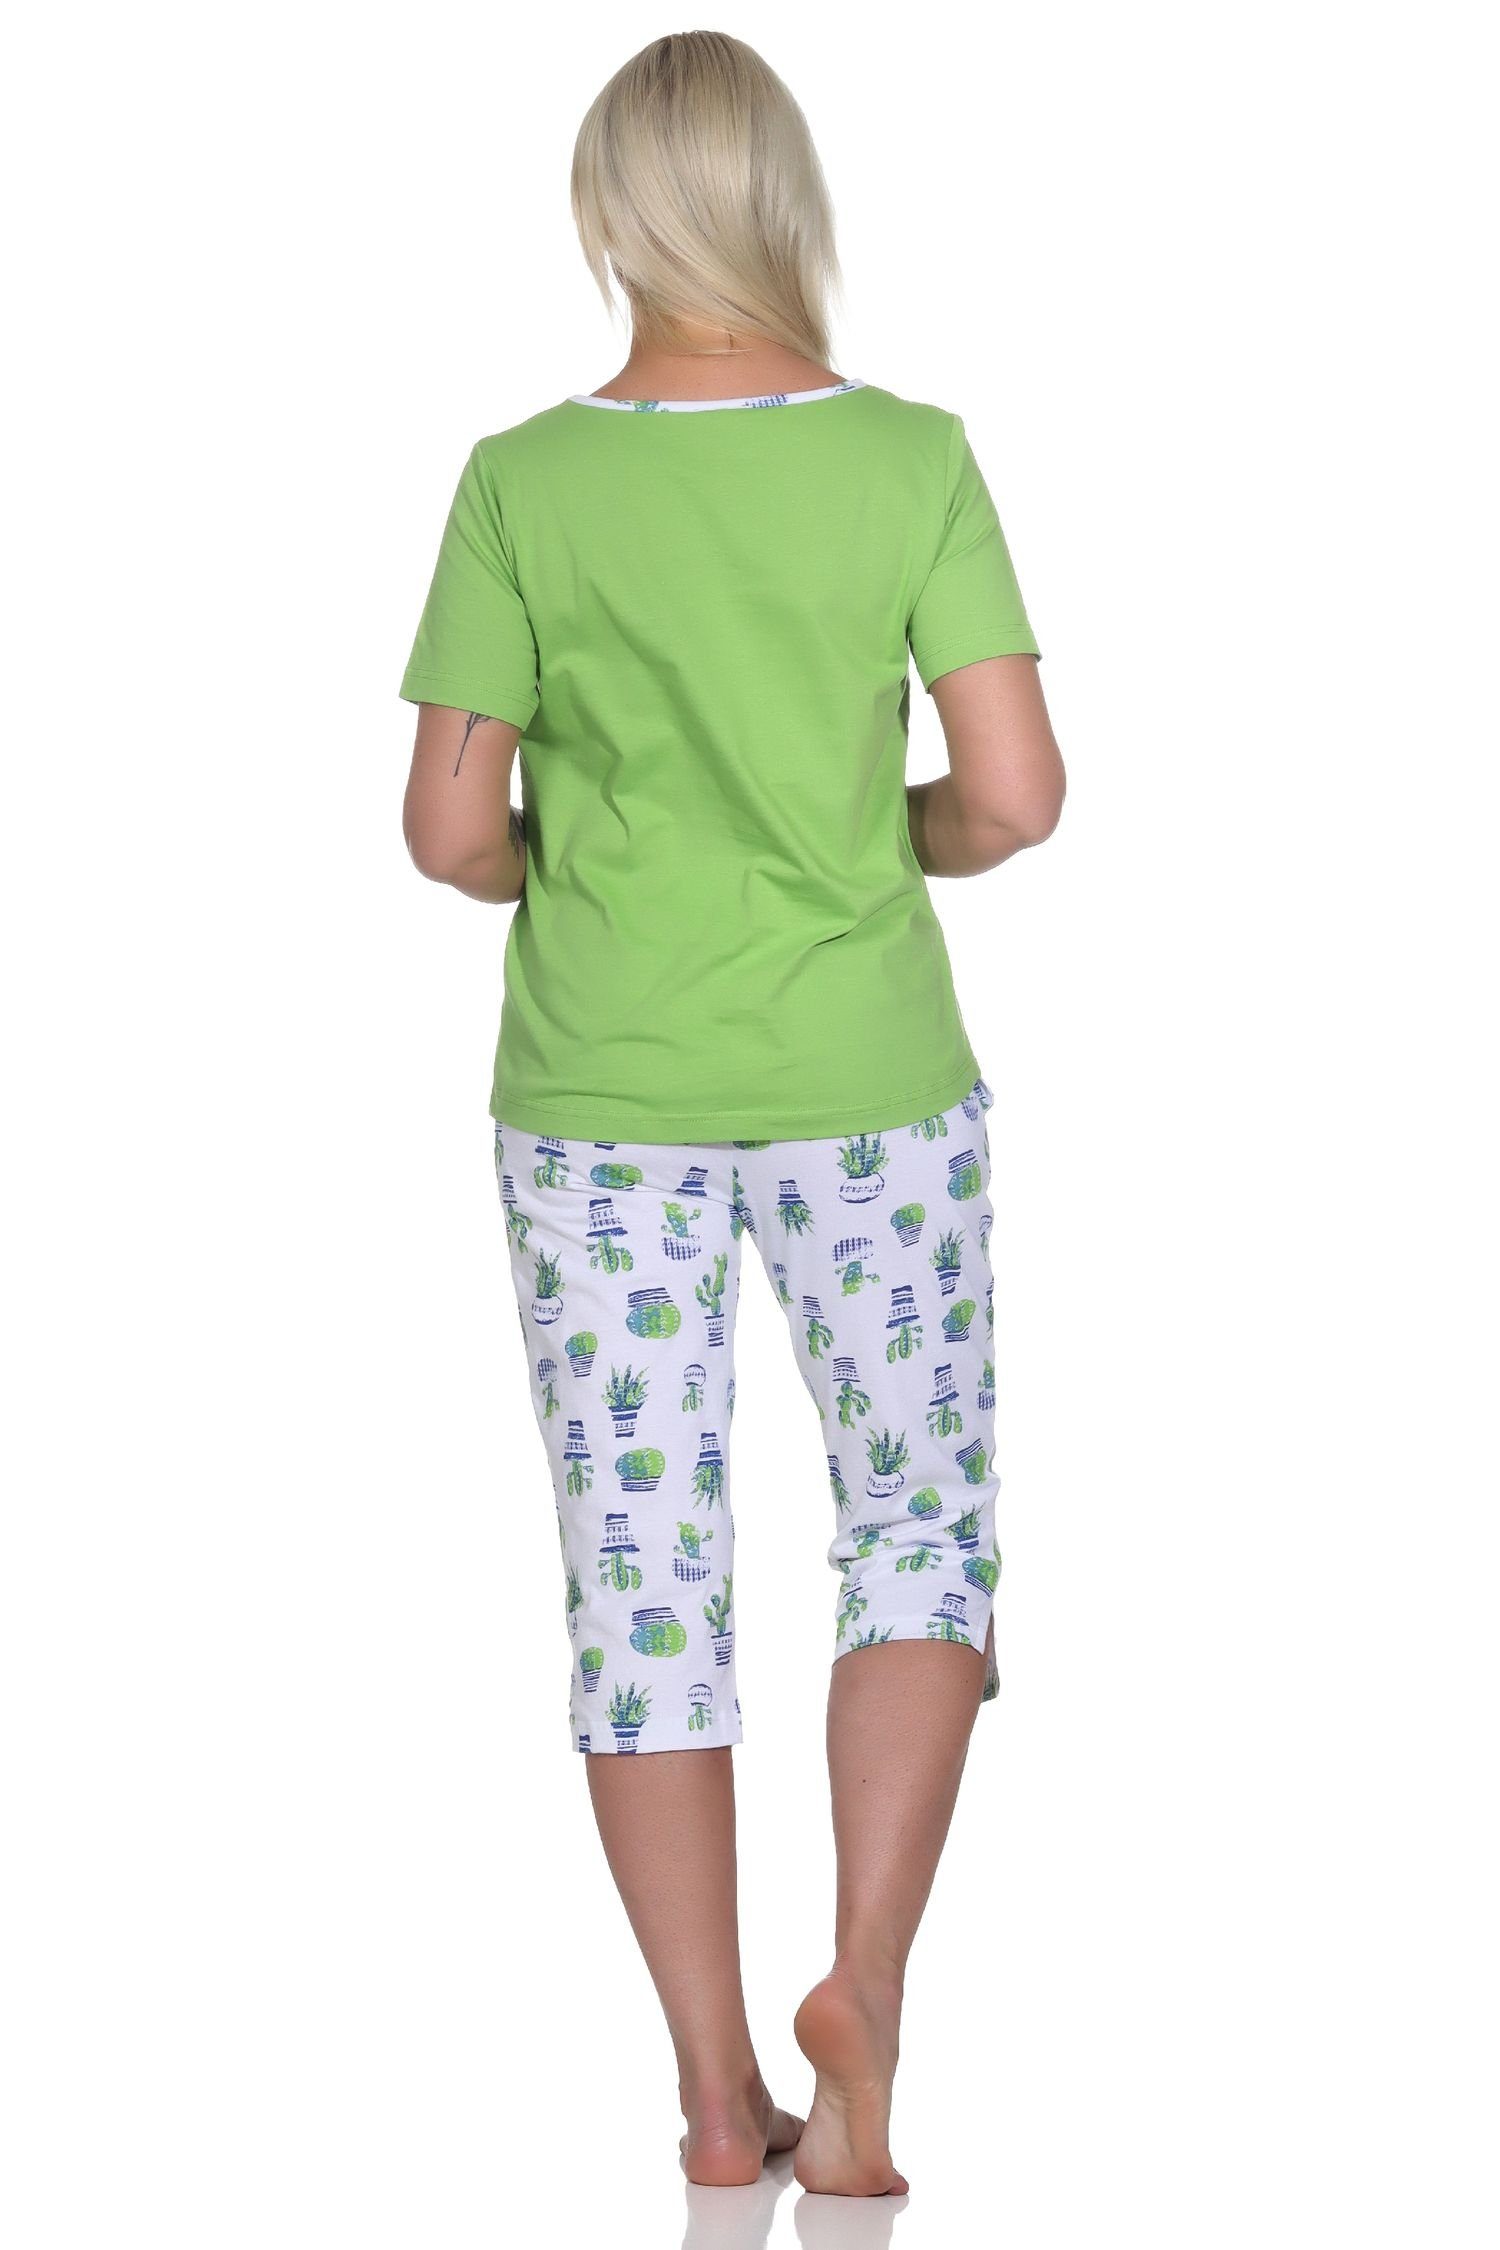 Normann Kurzarm mit als Motiv Damen Kaktus Pyjama Capri Schlafanzug grün